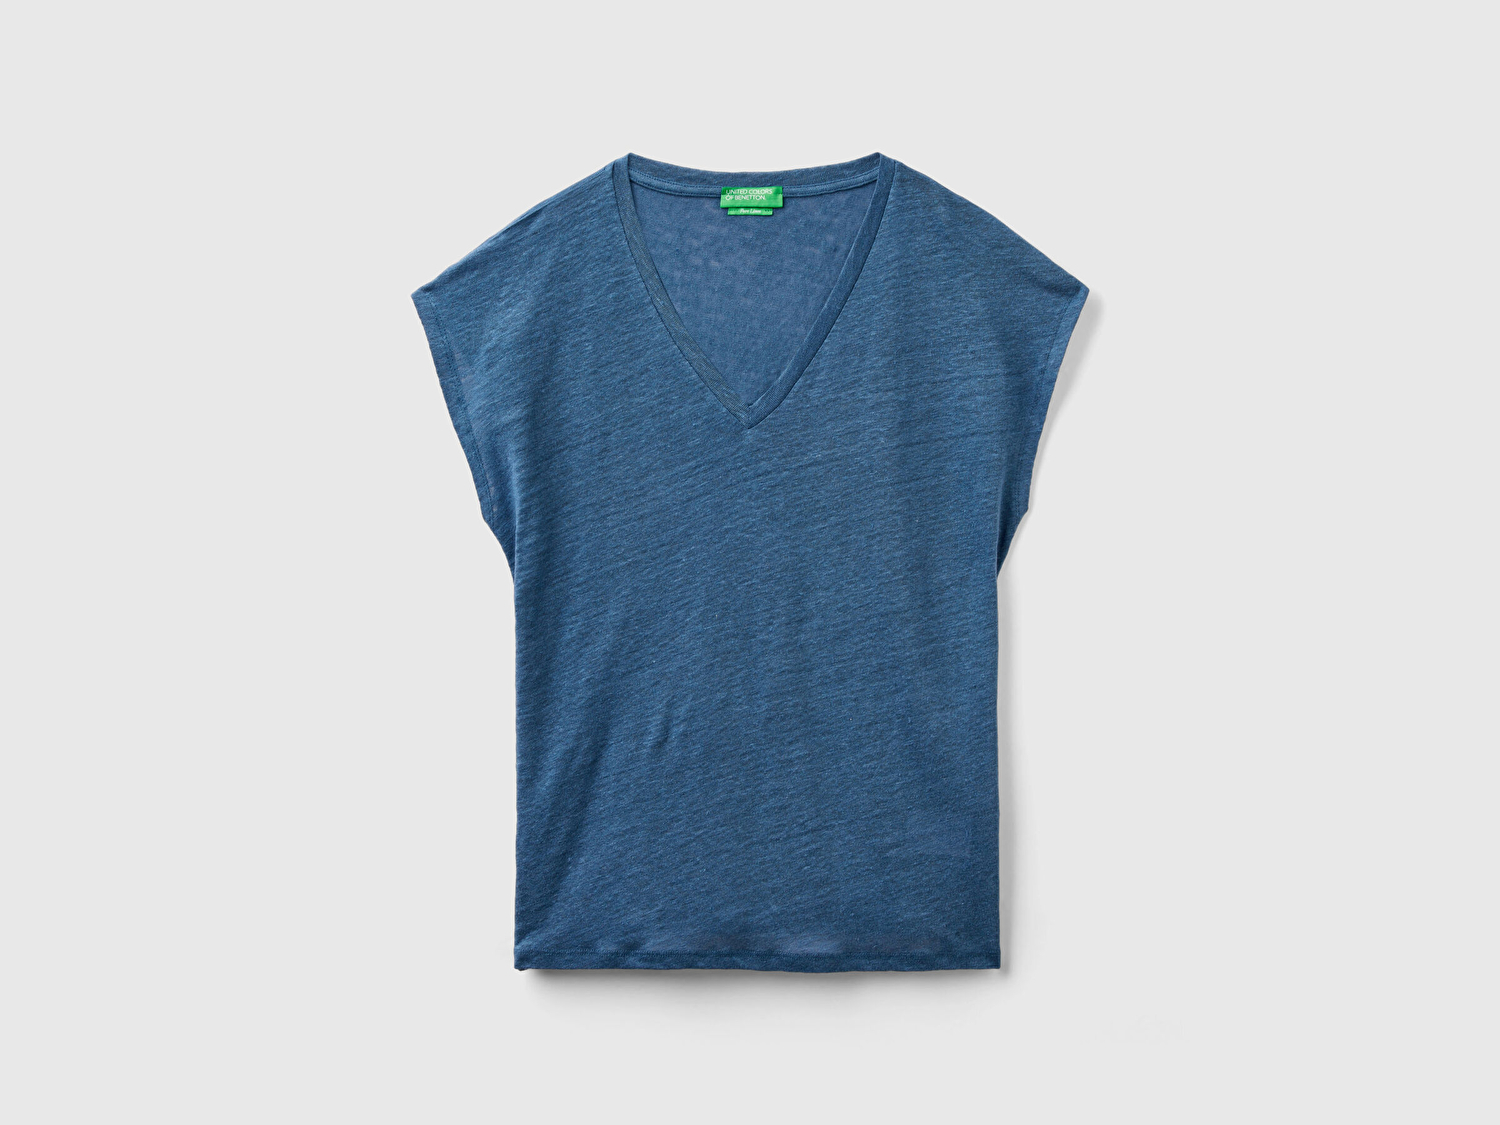 Benetton Kadın Gece Mavisi %100 Keten Rahat Kalıp Derin V Yaka Kolsuz T-Shirt